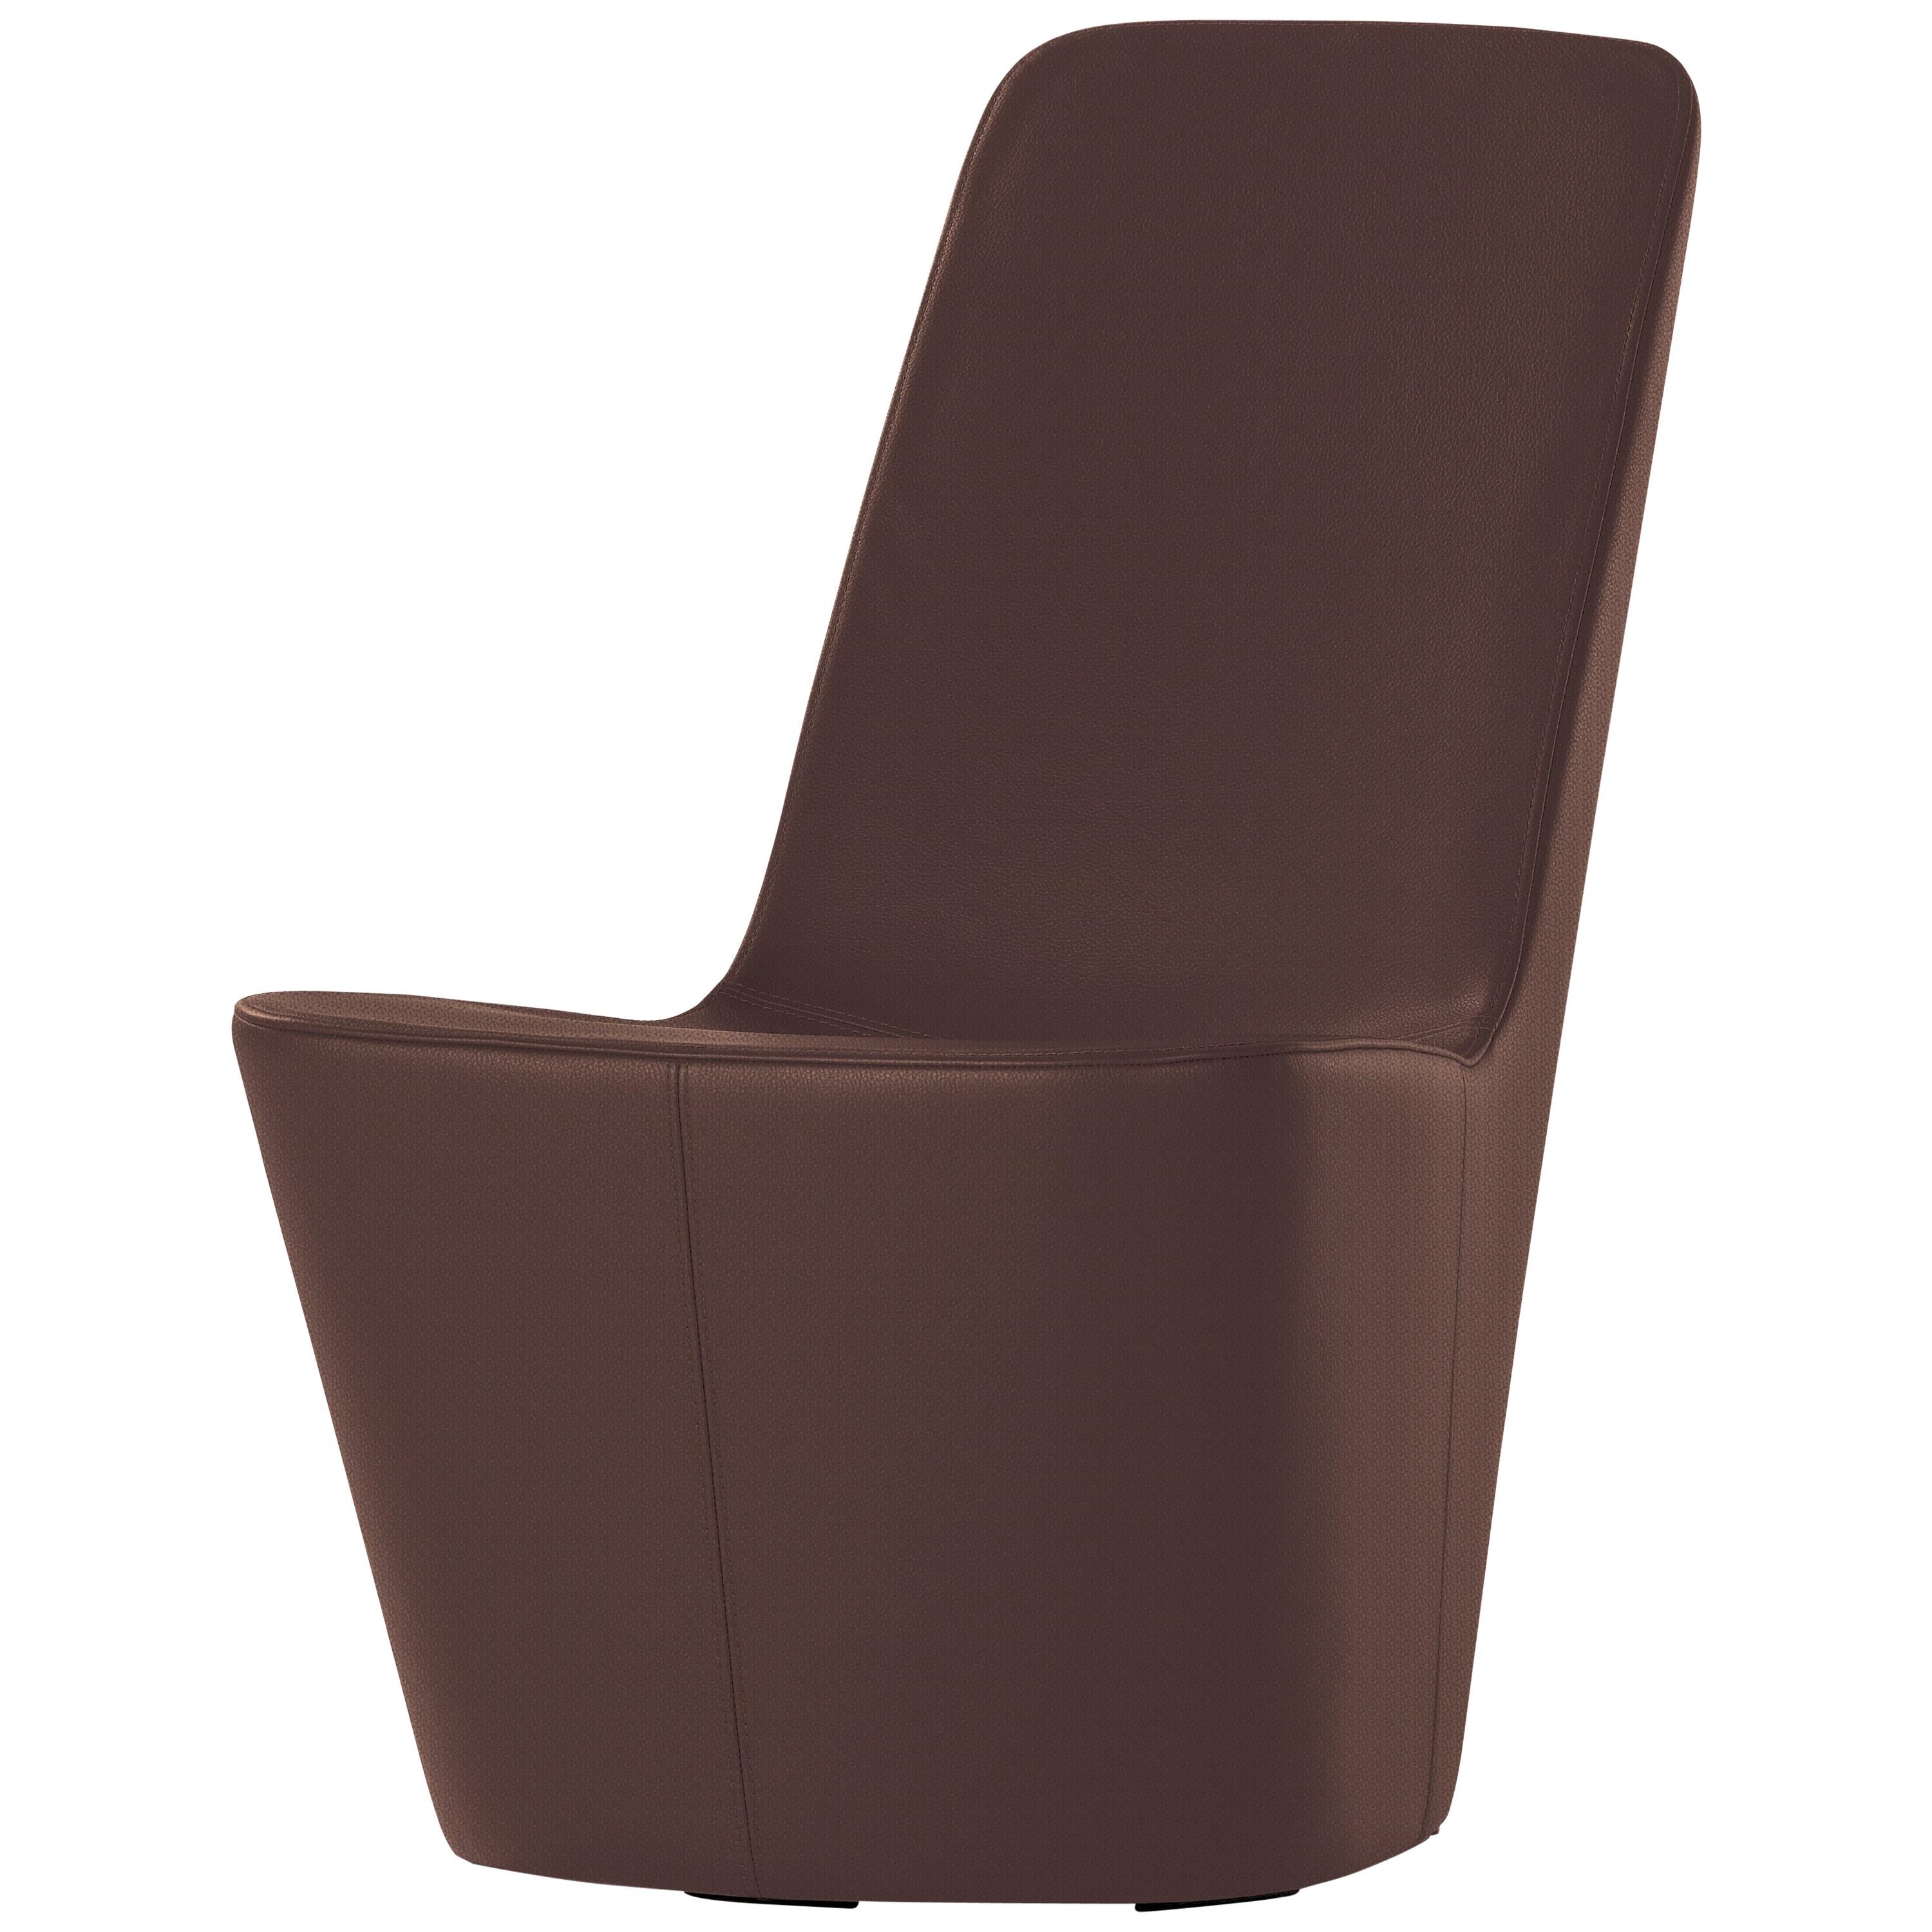 Vitra Monopod Chair in Maroon Leather by Jasper Morrison For Sale